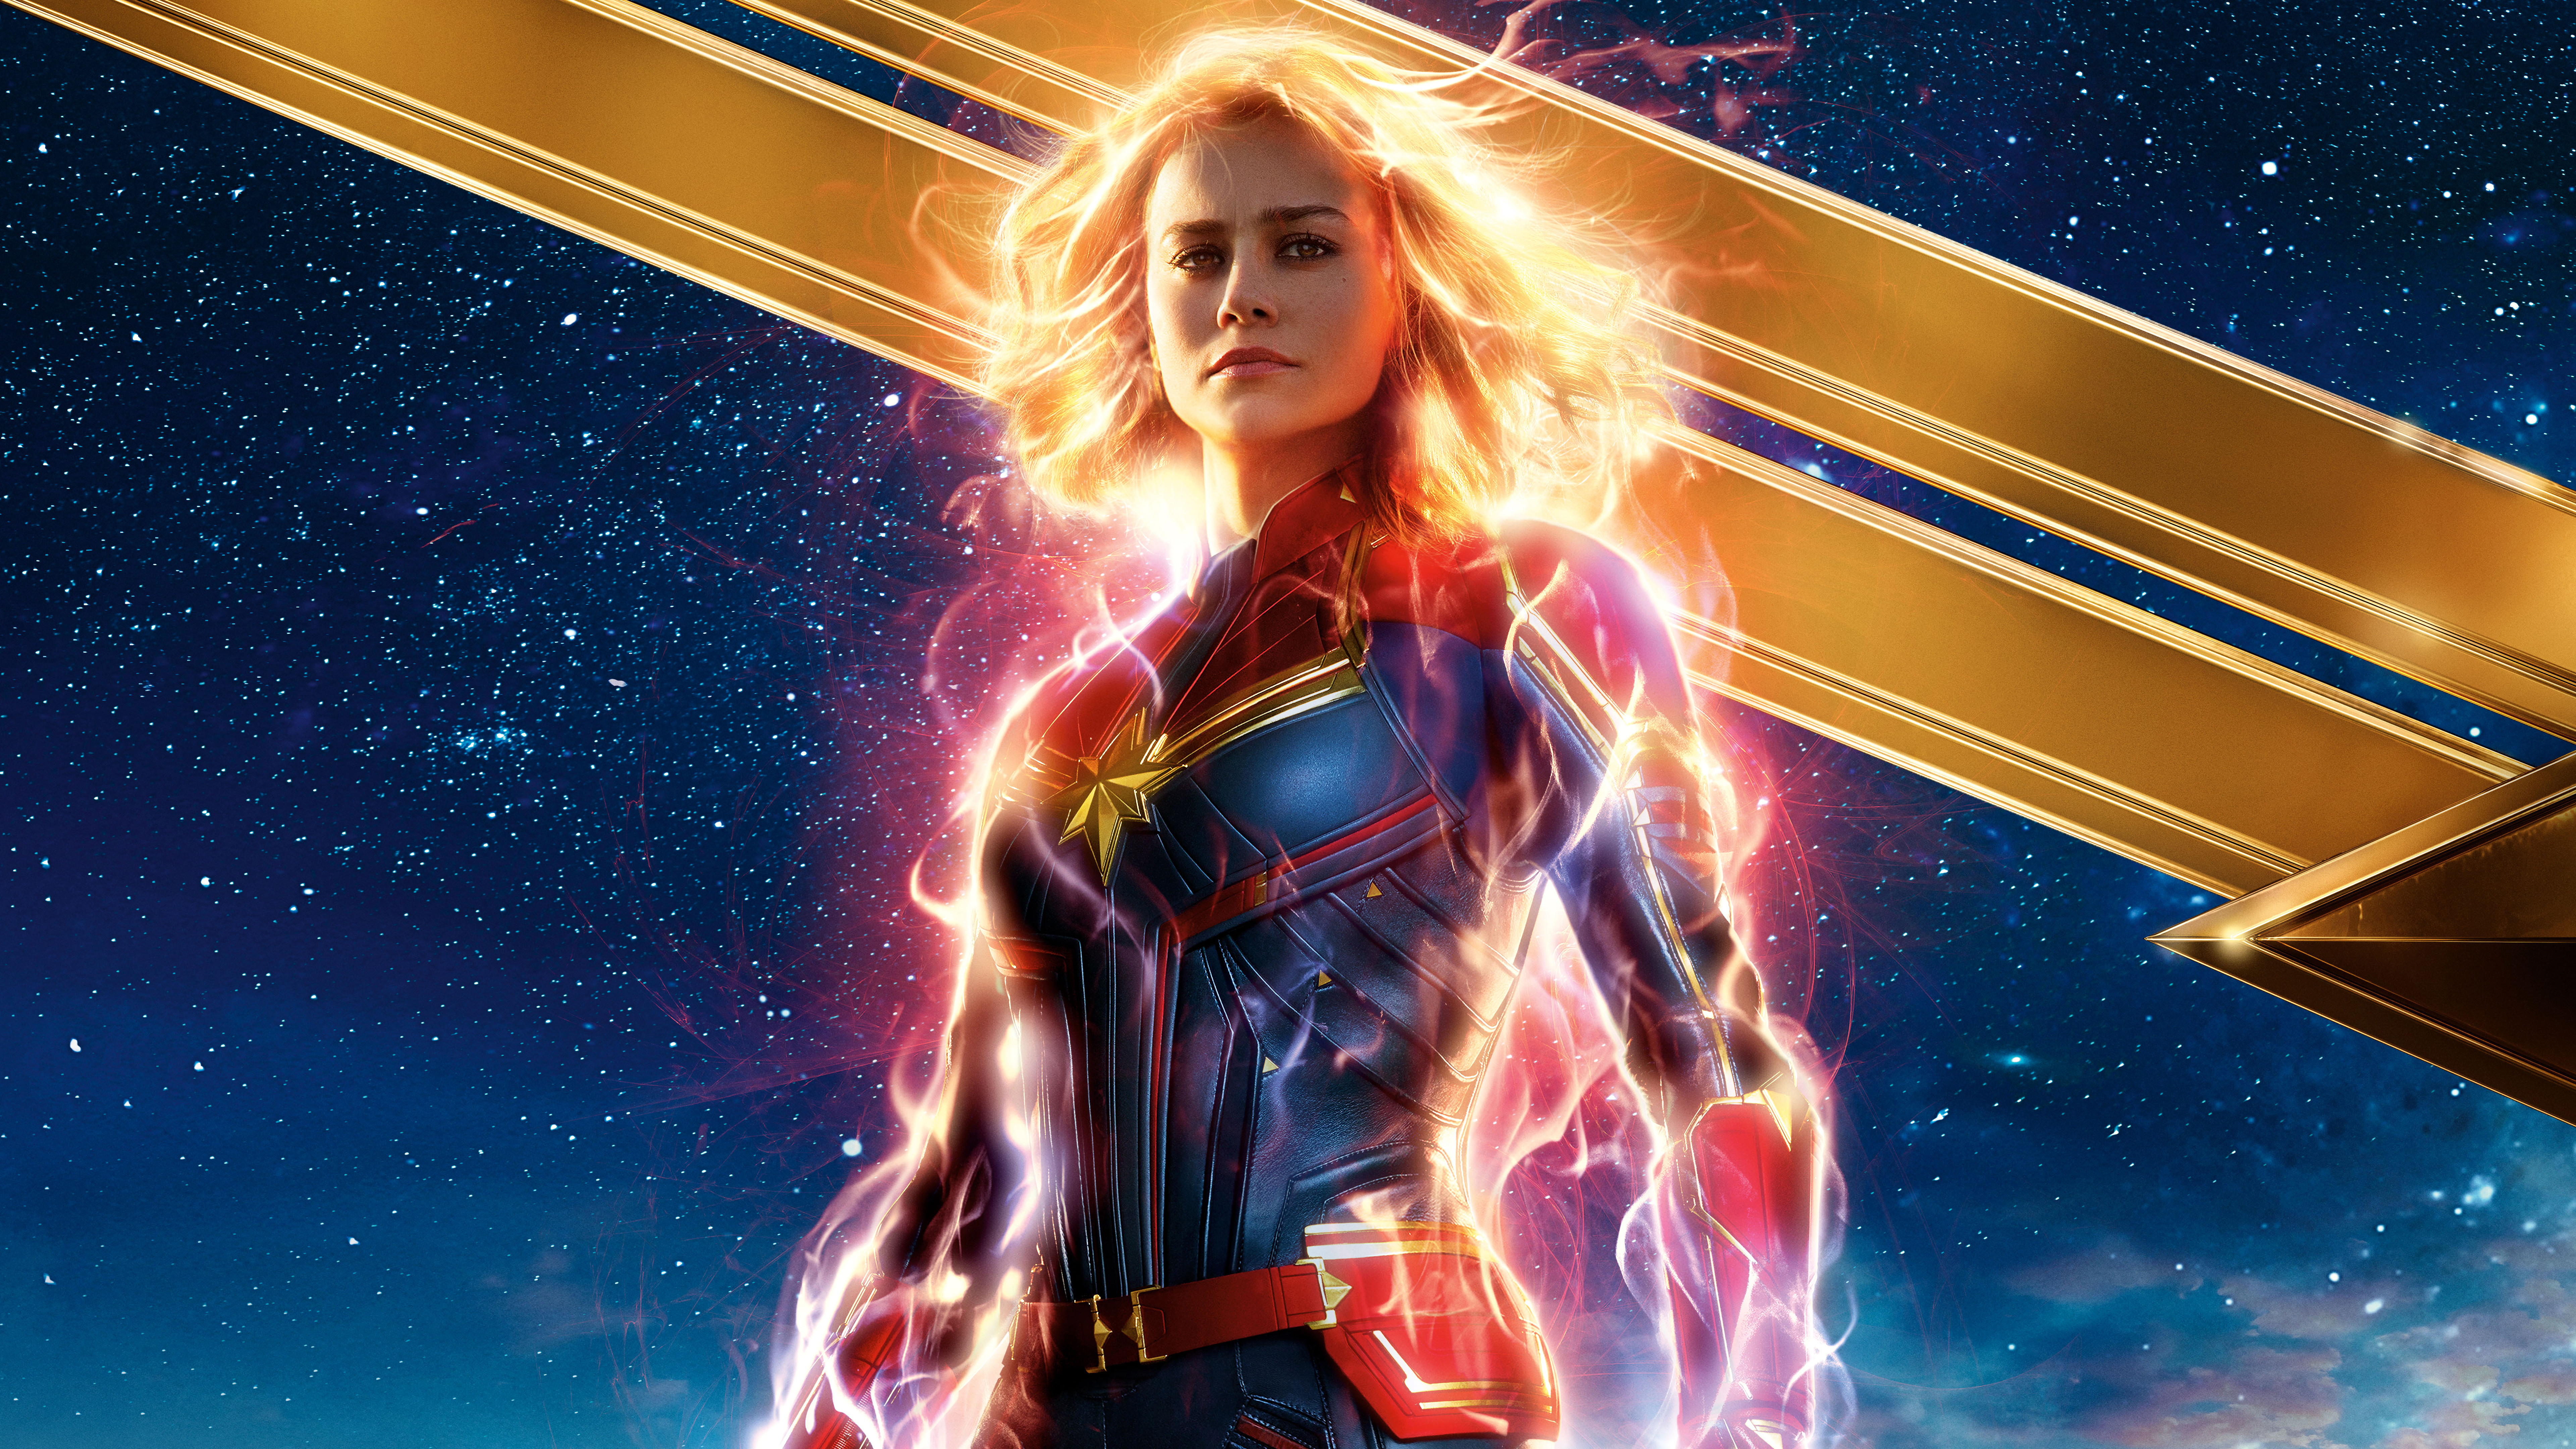 Brie Larson As Captain Marvel Illustration Wallpapers.